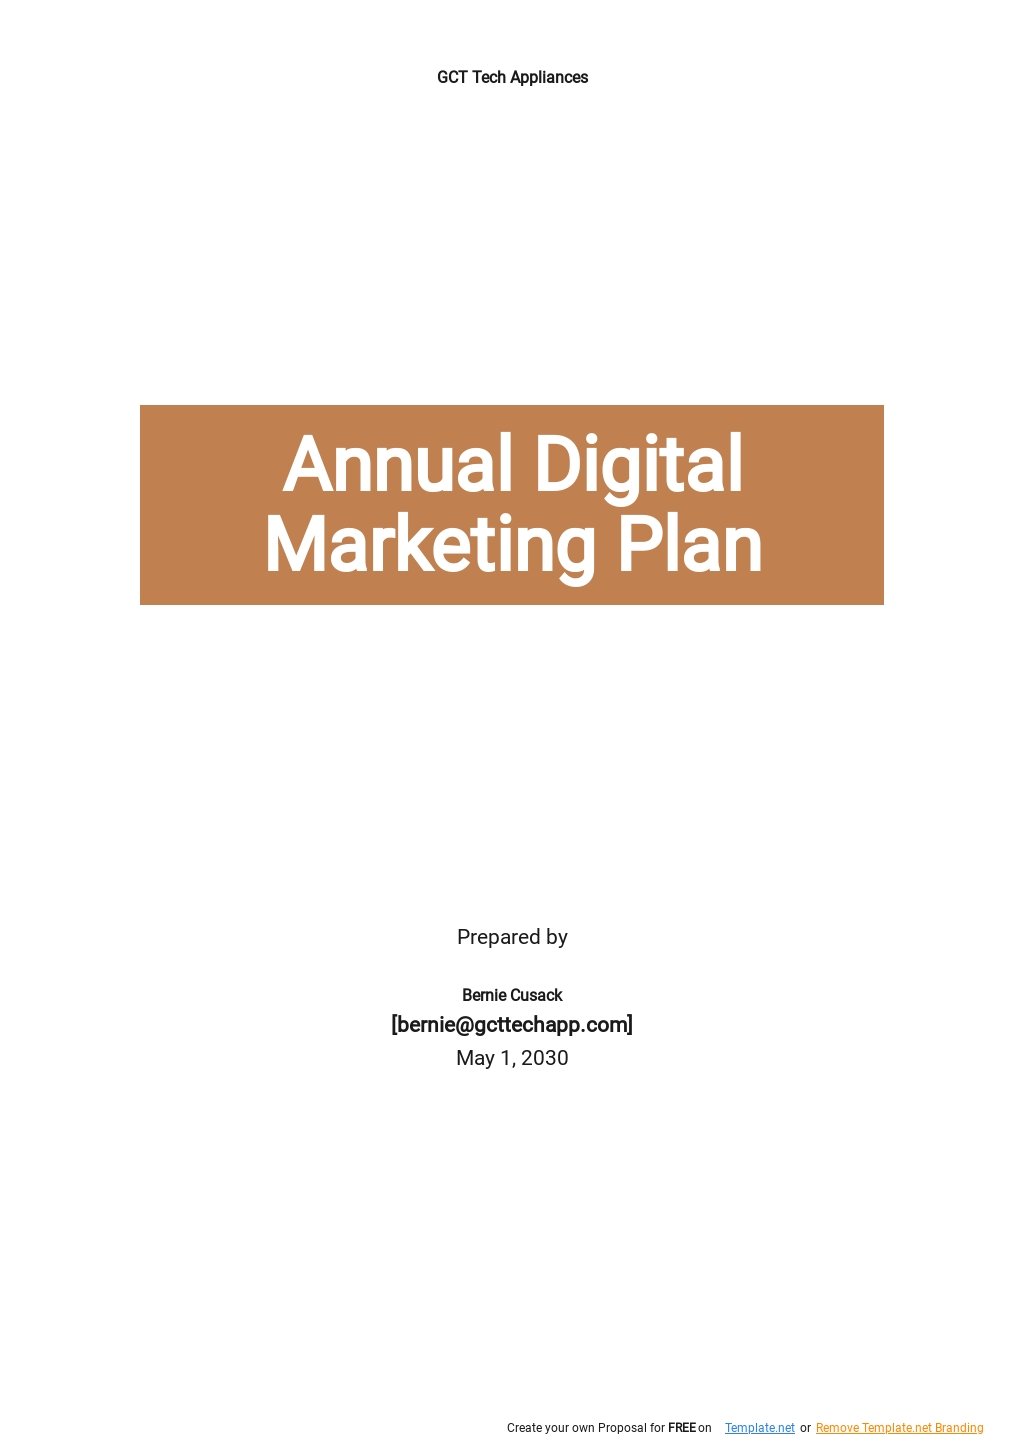 Annual Digital Marketing Plan Template.jpe